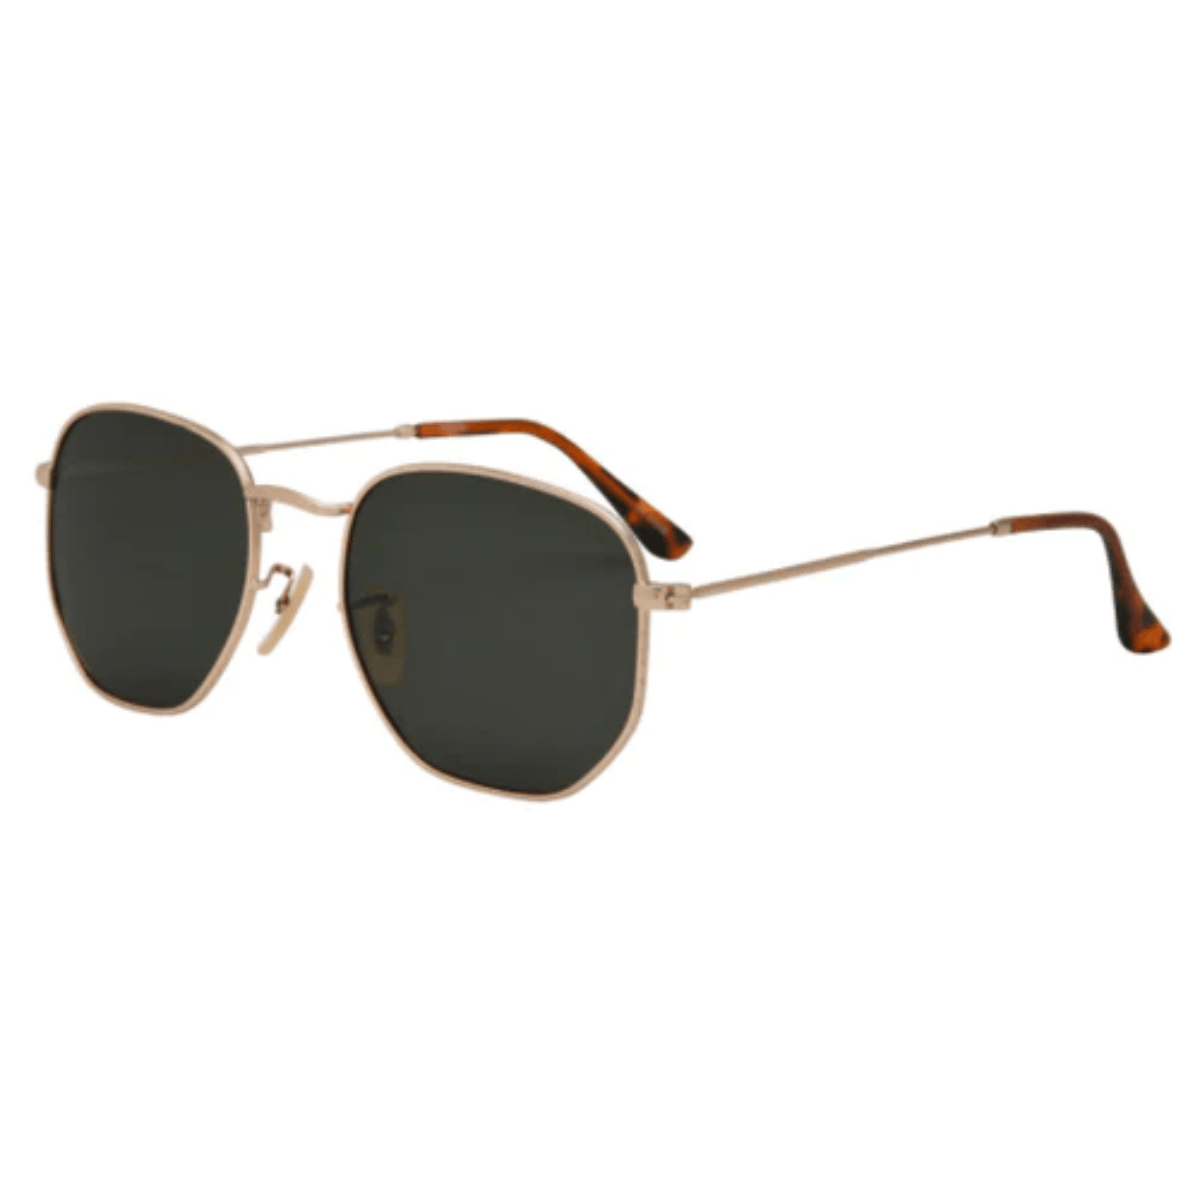 Penn Sunglasses (Gold/Green)